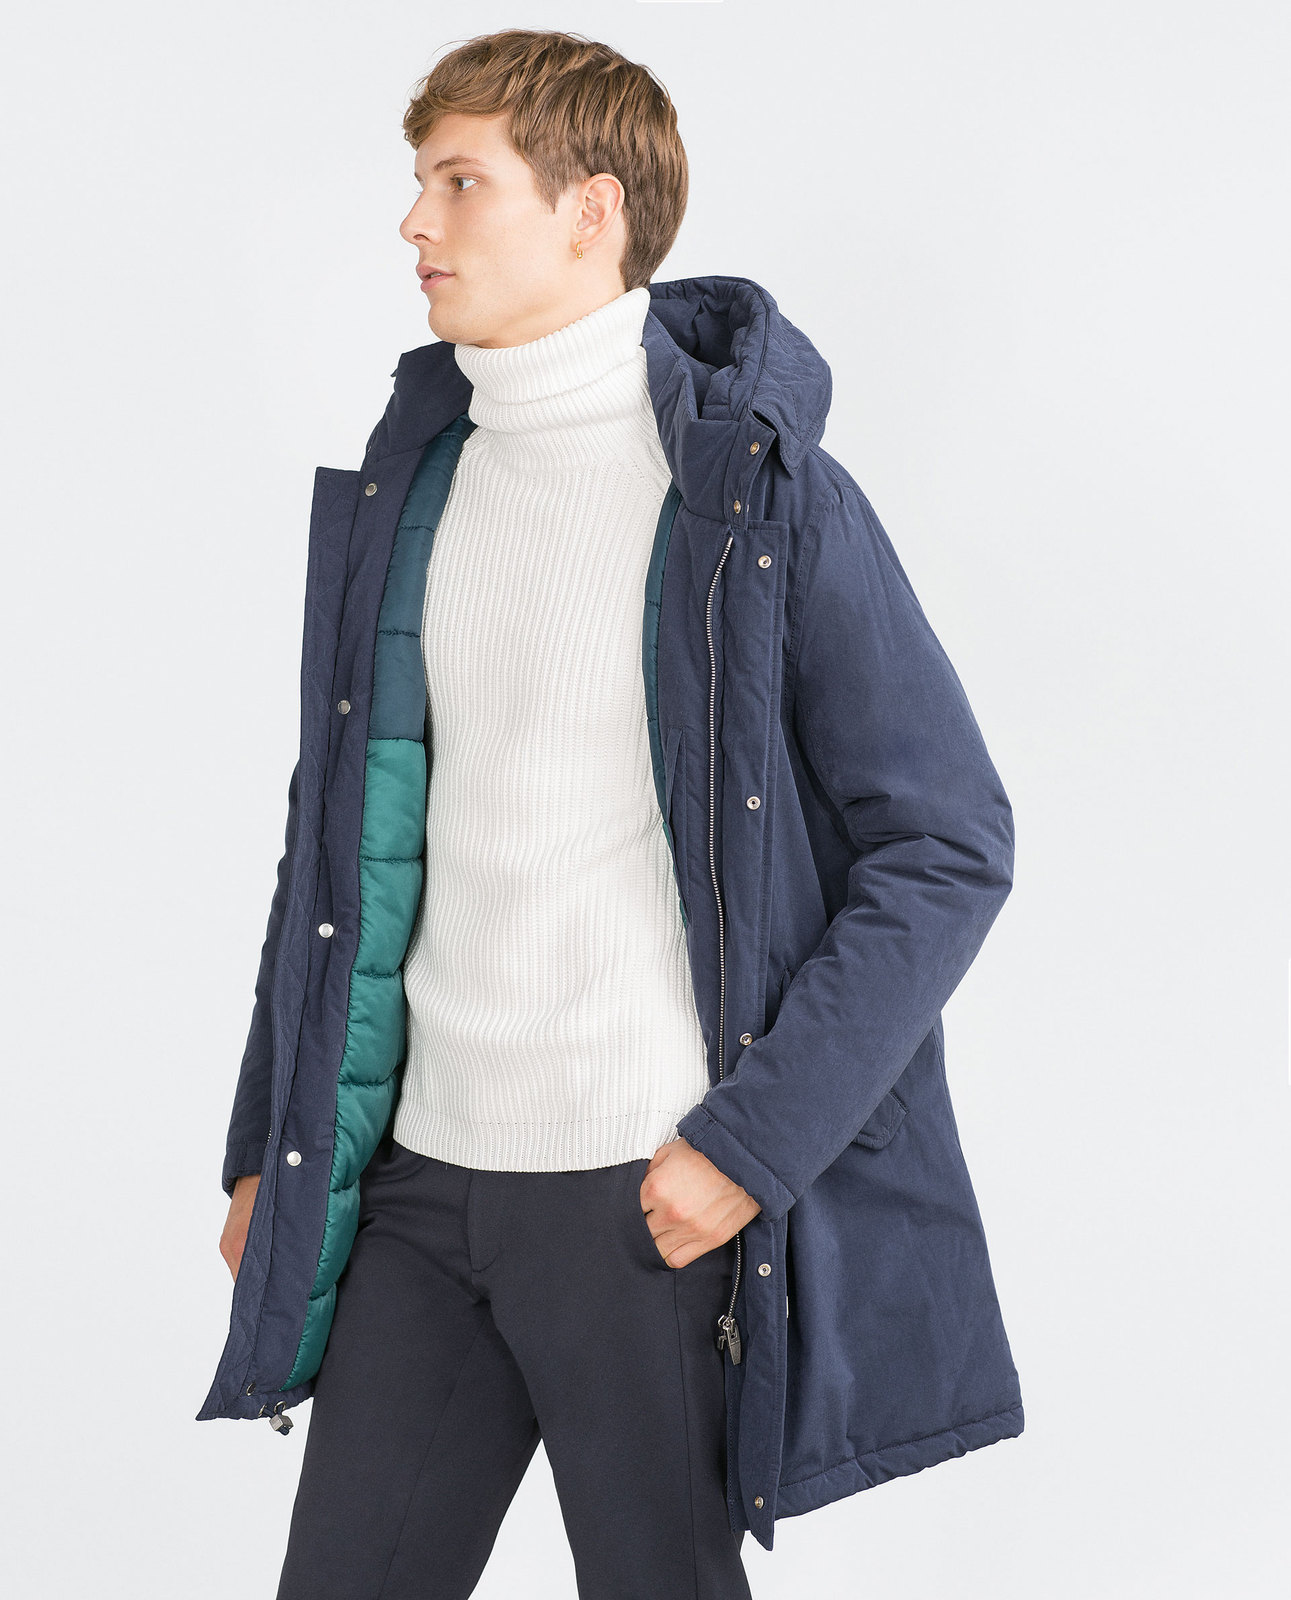 Zara kék kapucnis téli kabát 2015 fotója